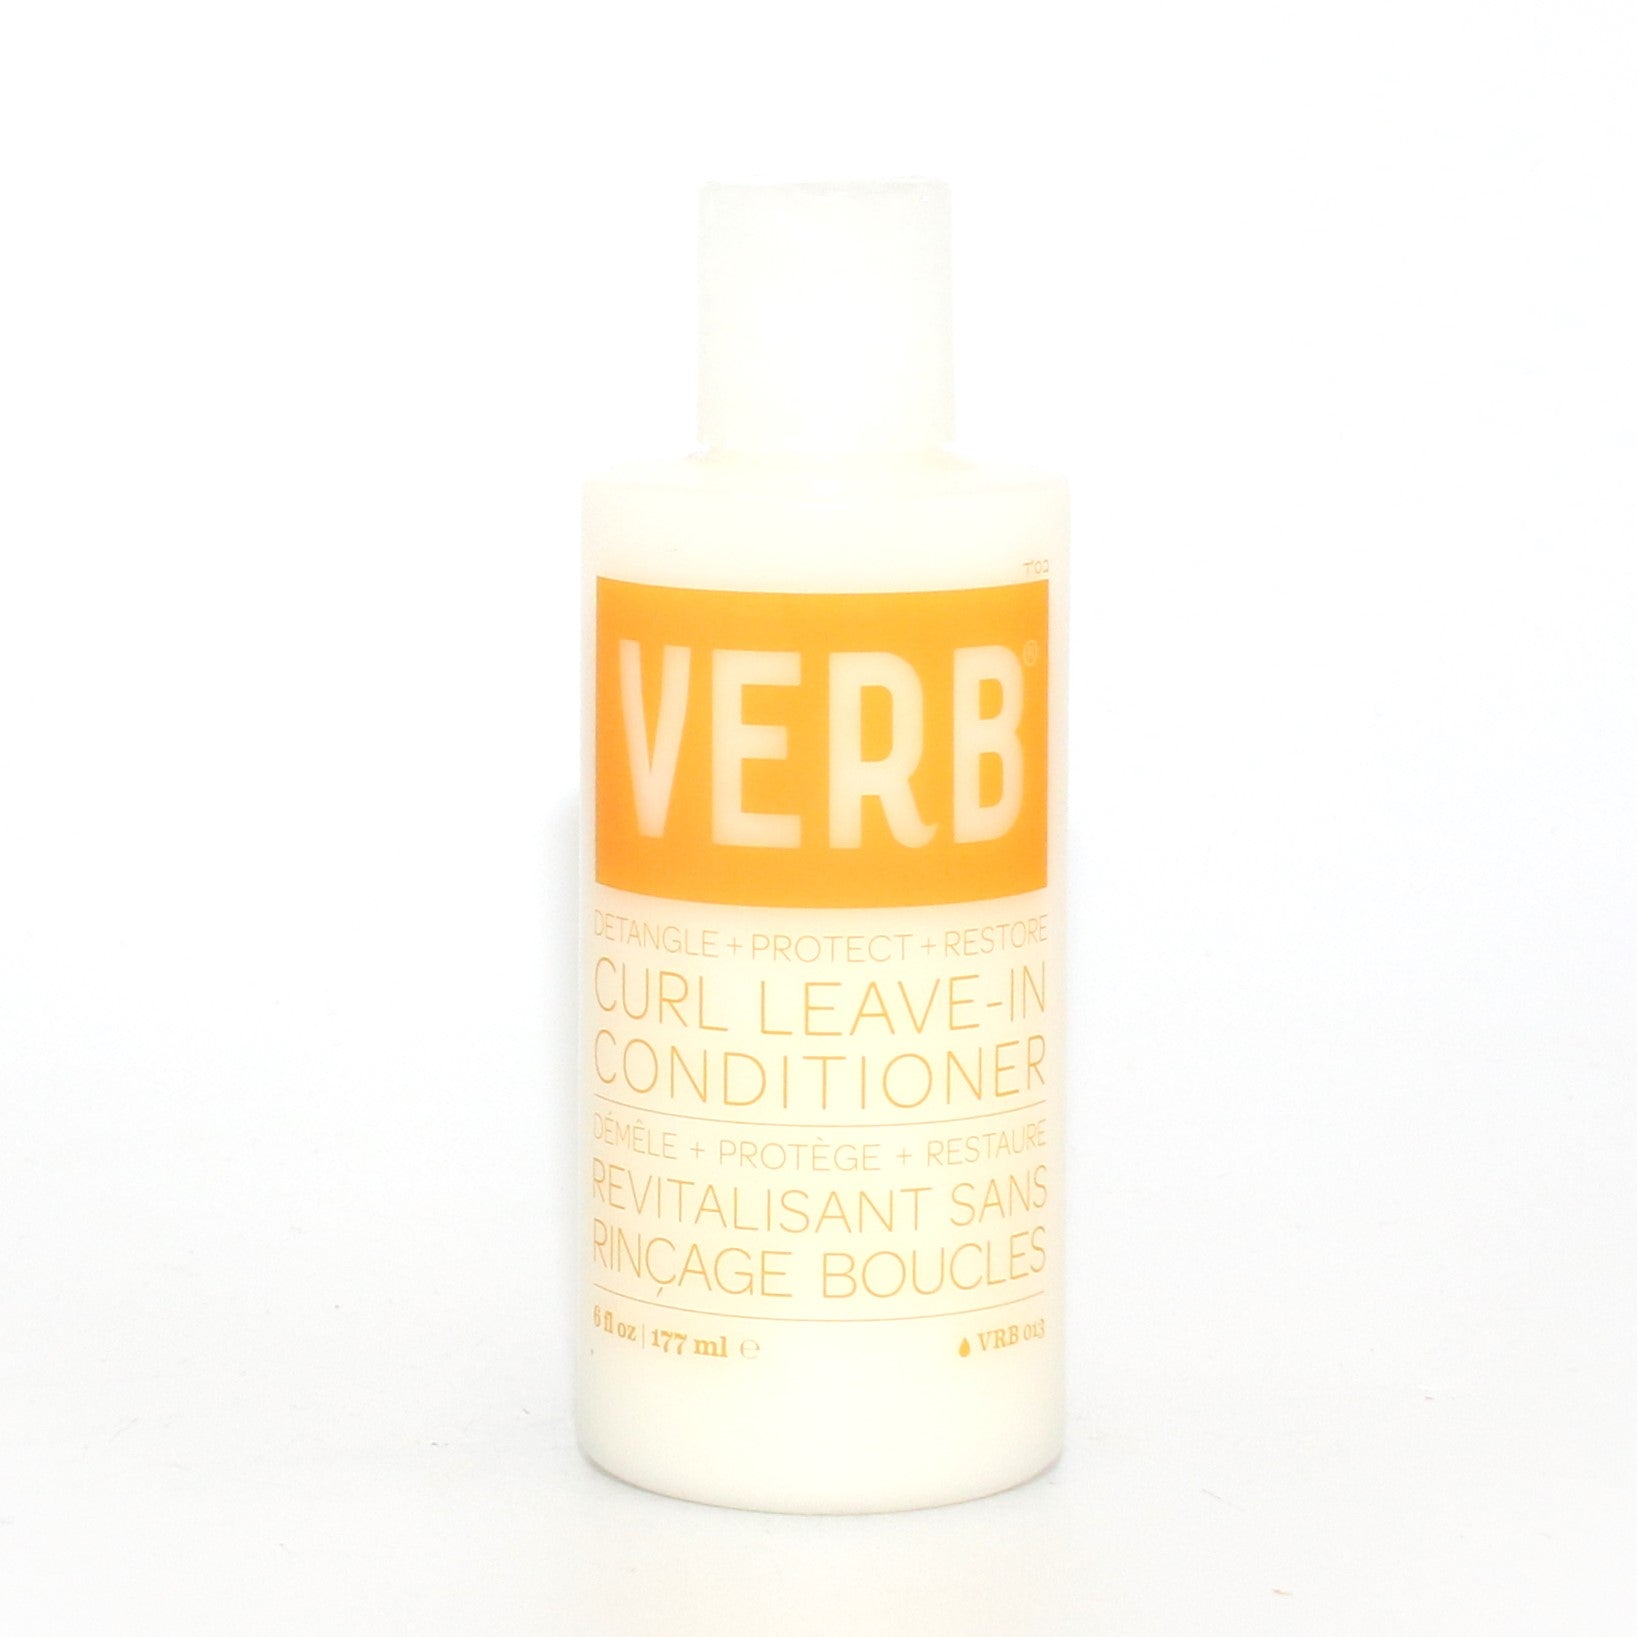 Verb Curl Leave In Conditioner 6 oz